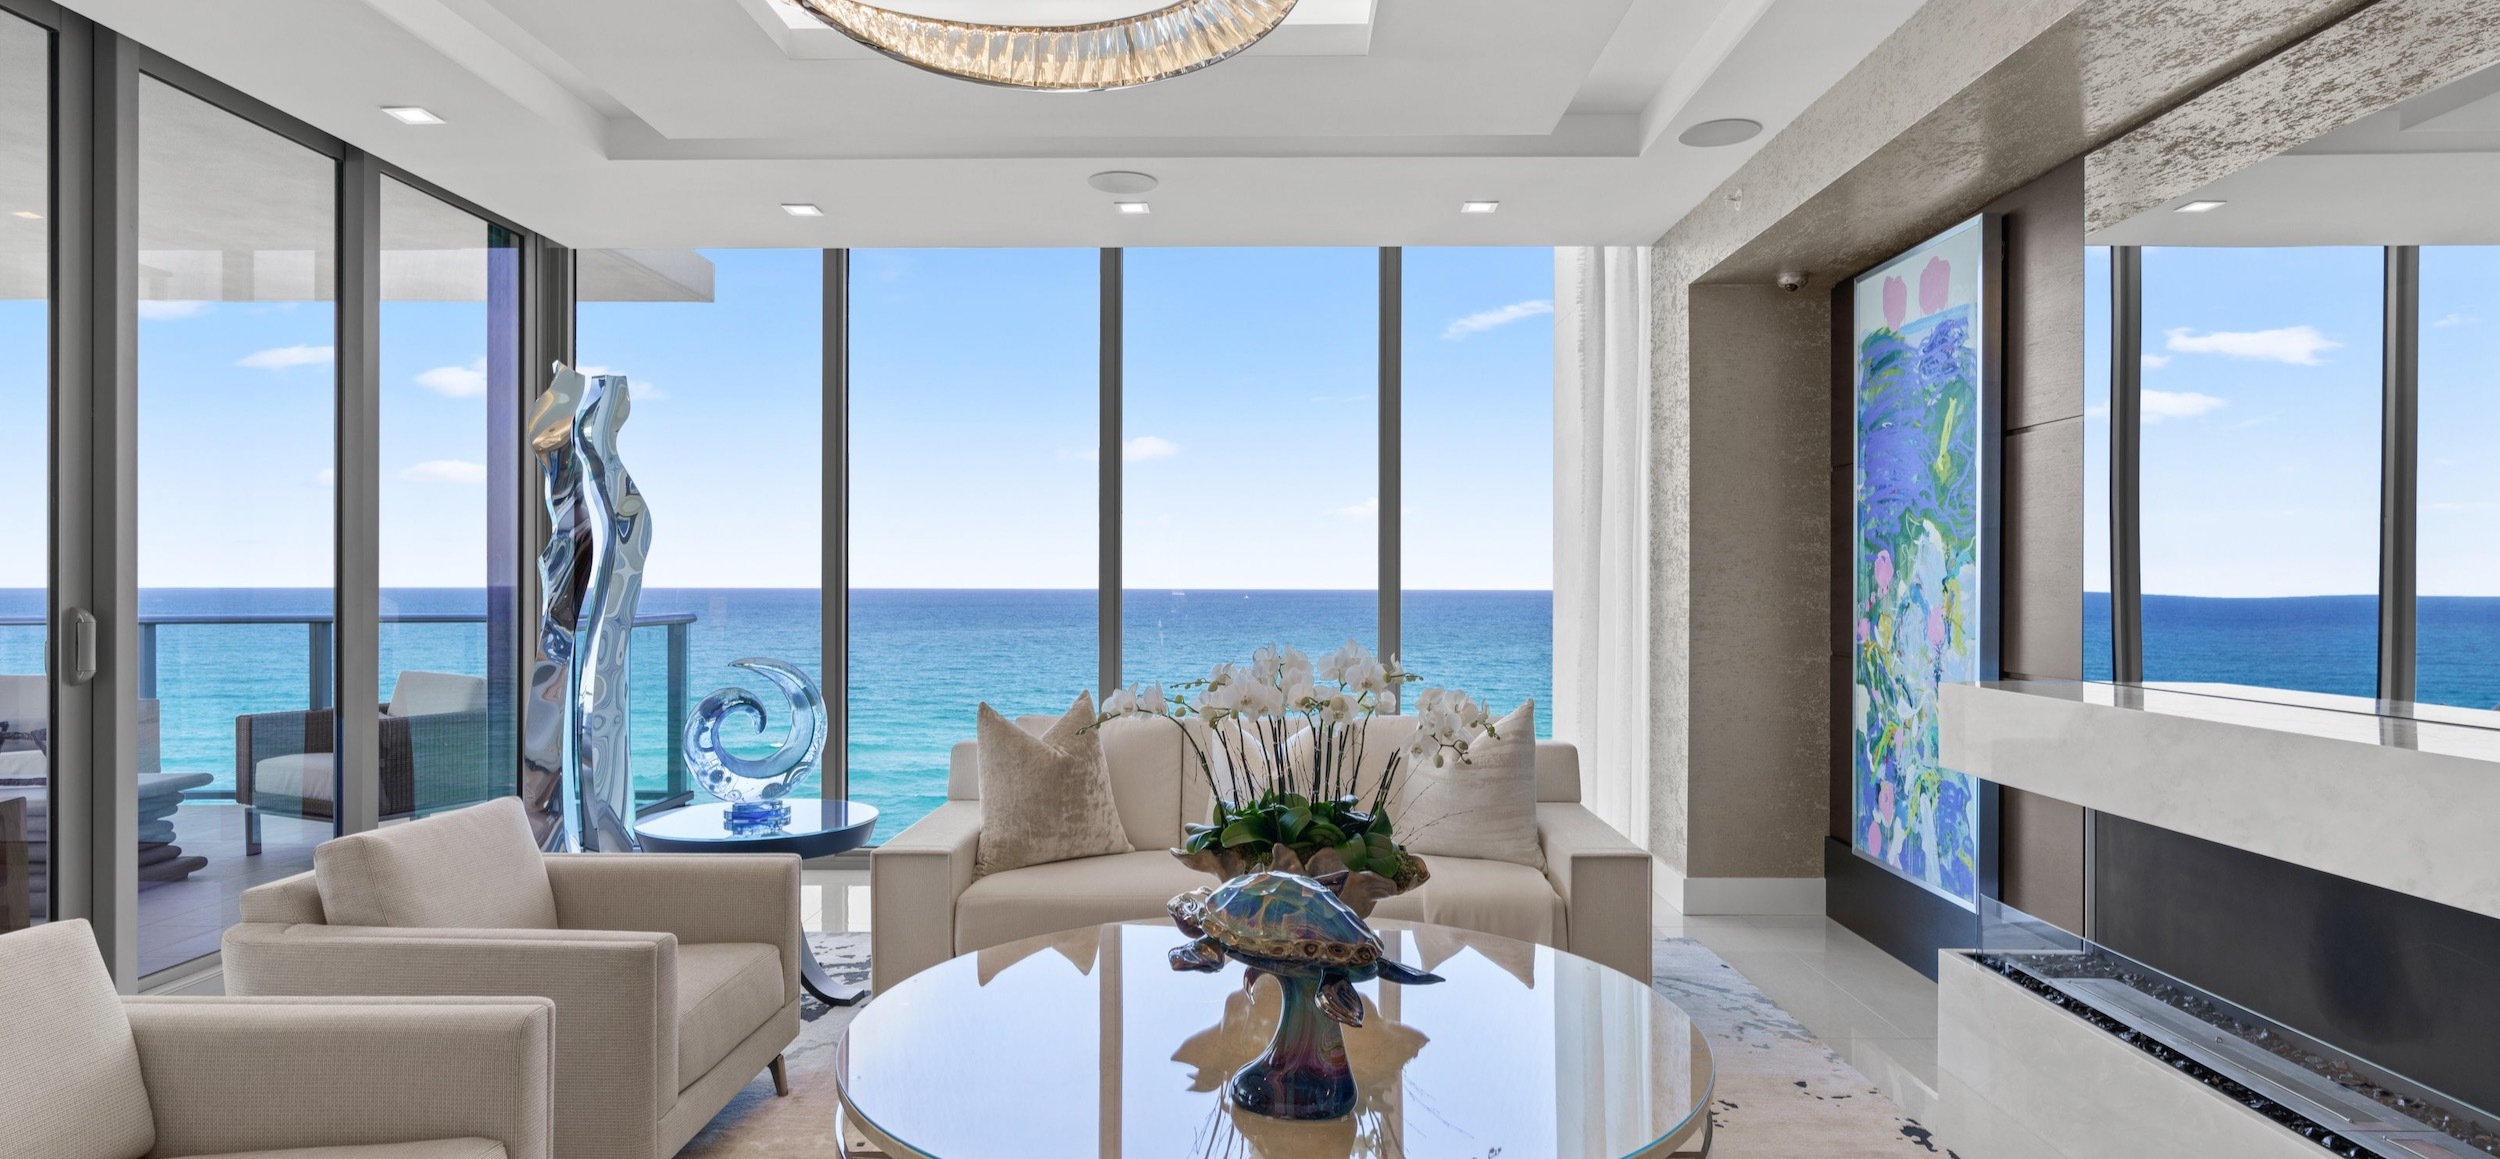 Palm Beach Condos For Sale | Modern Palm Beach Condo Buildings